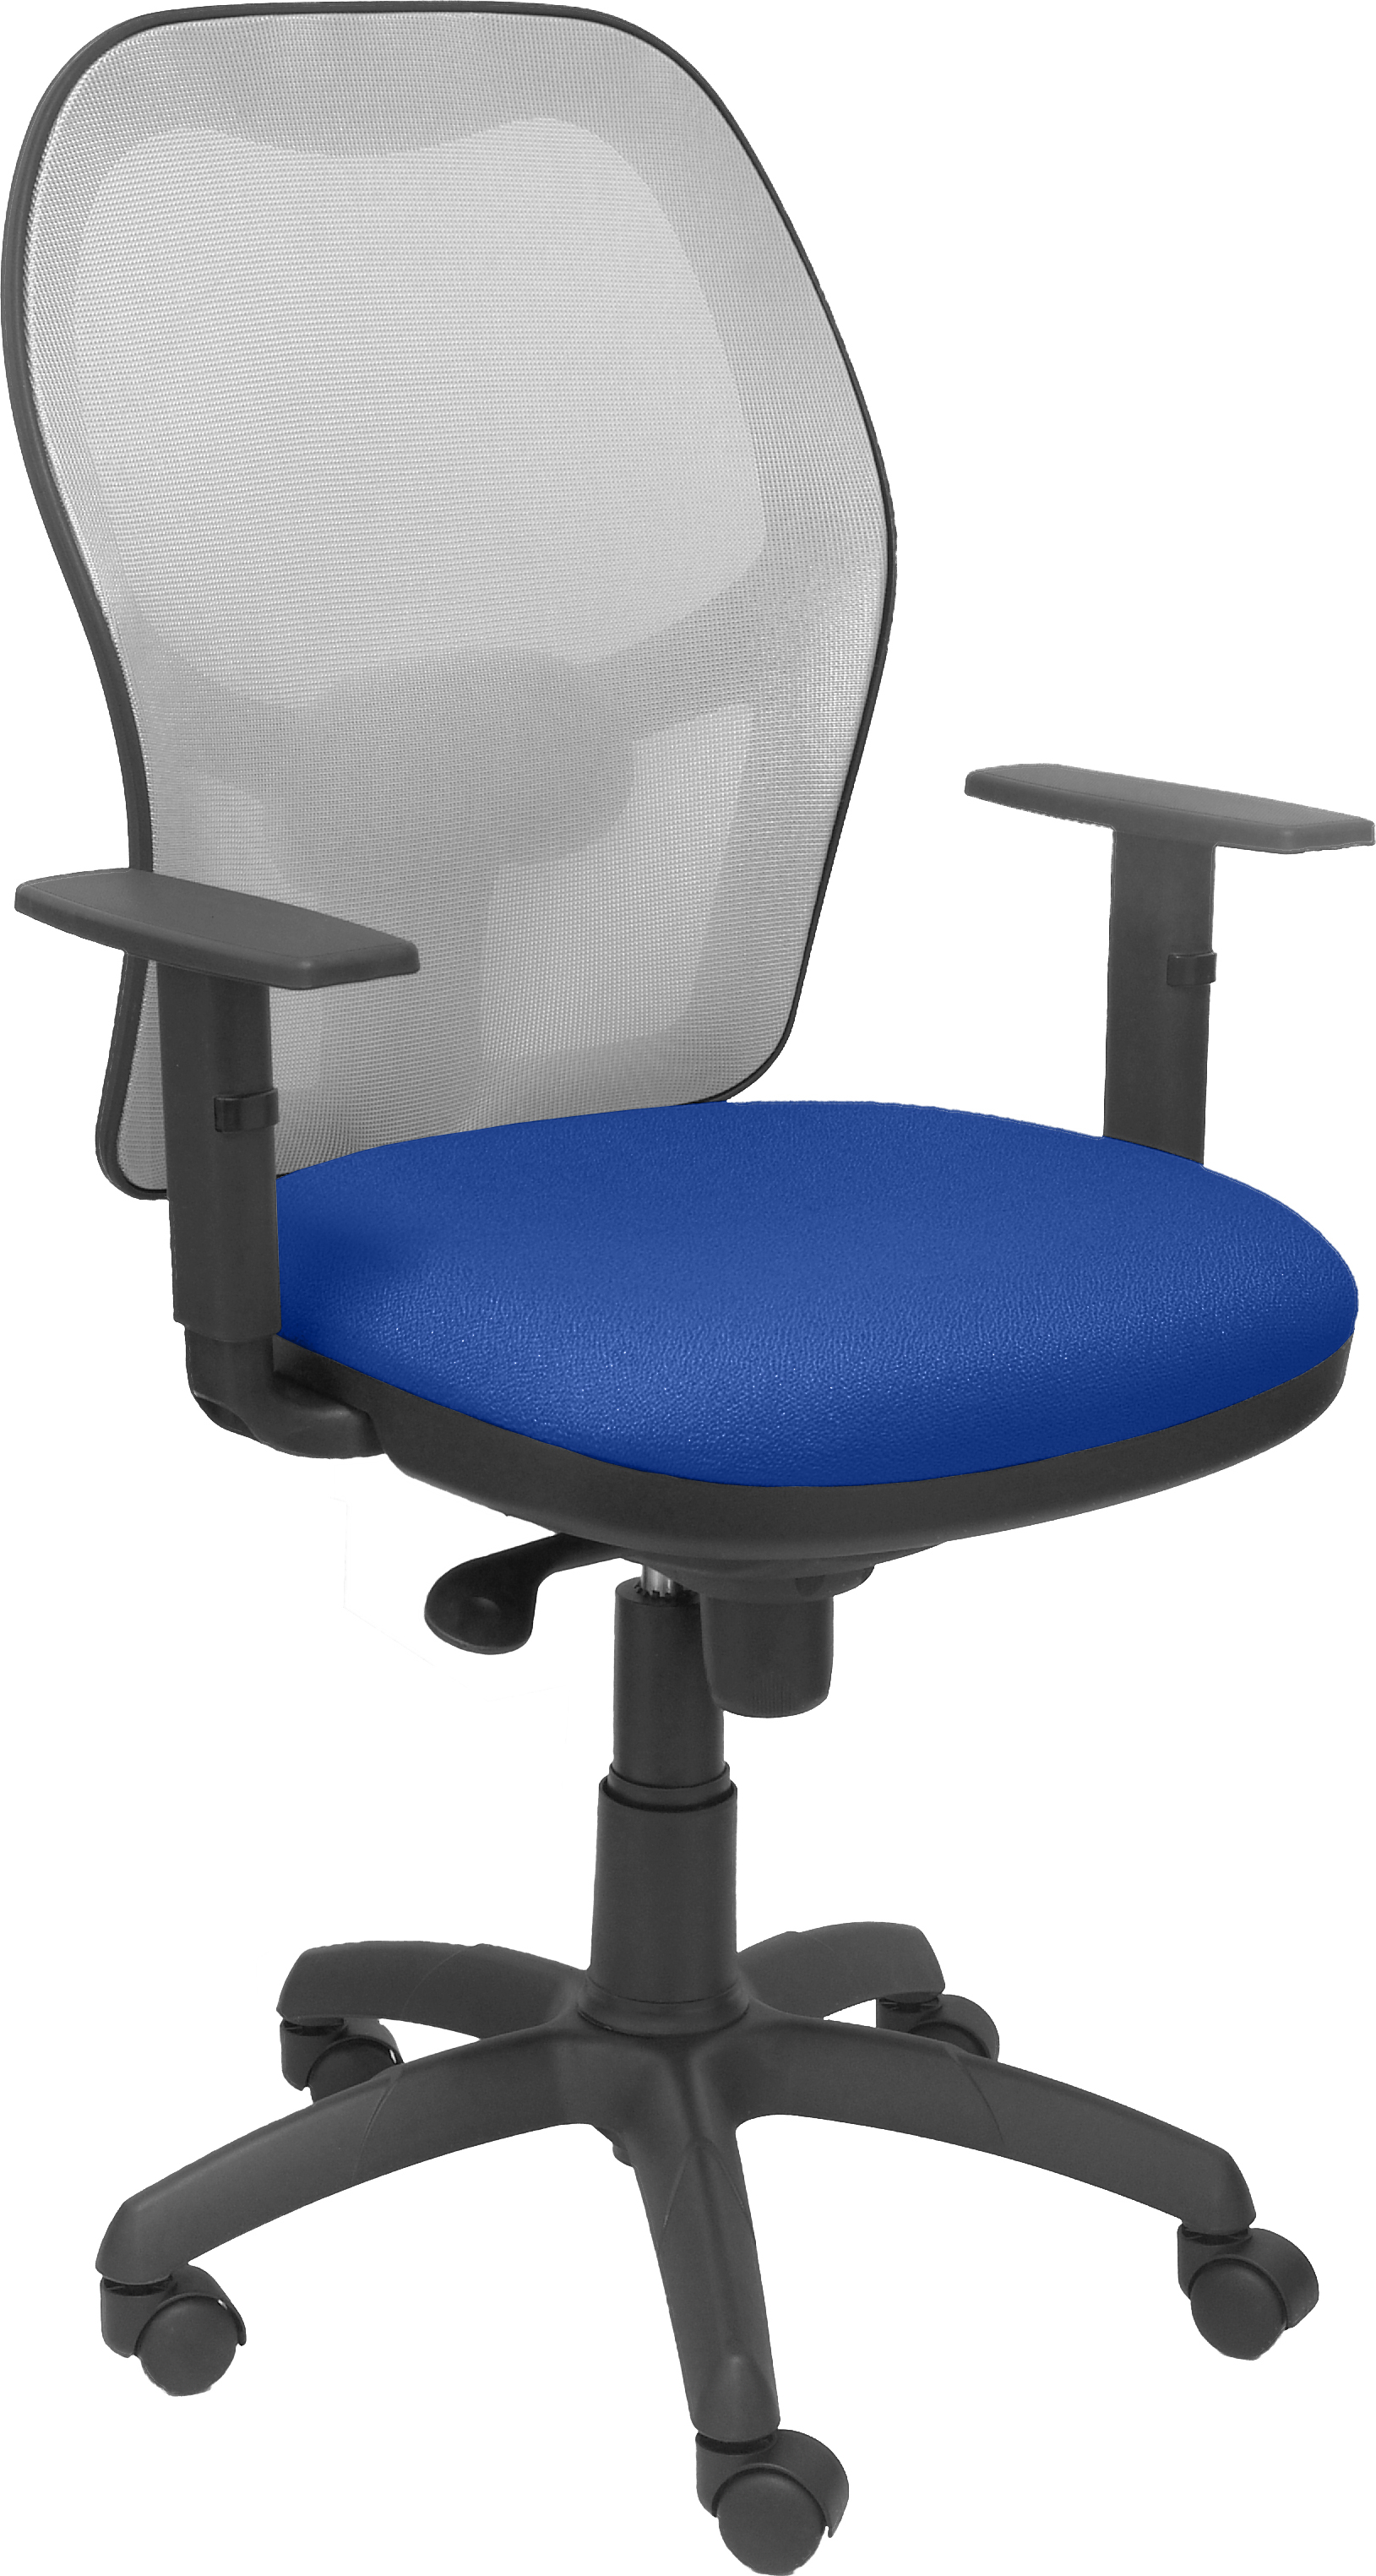 Silla De Escritorio operativa pyc jorquera azul brazos ajustables malla oficina piqueras y crespo modelo tejido bali 2 gris